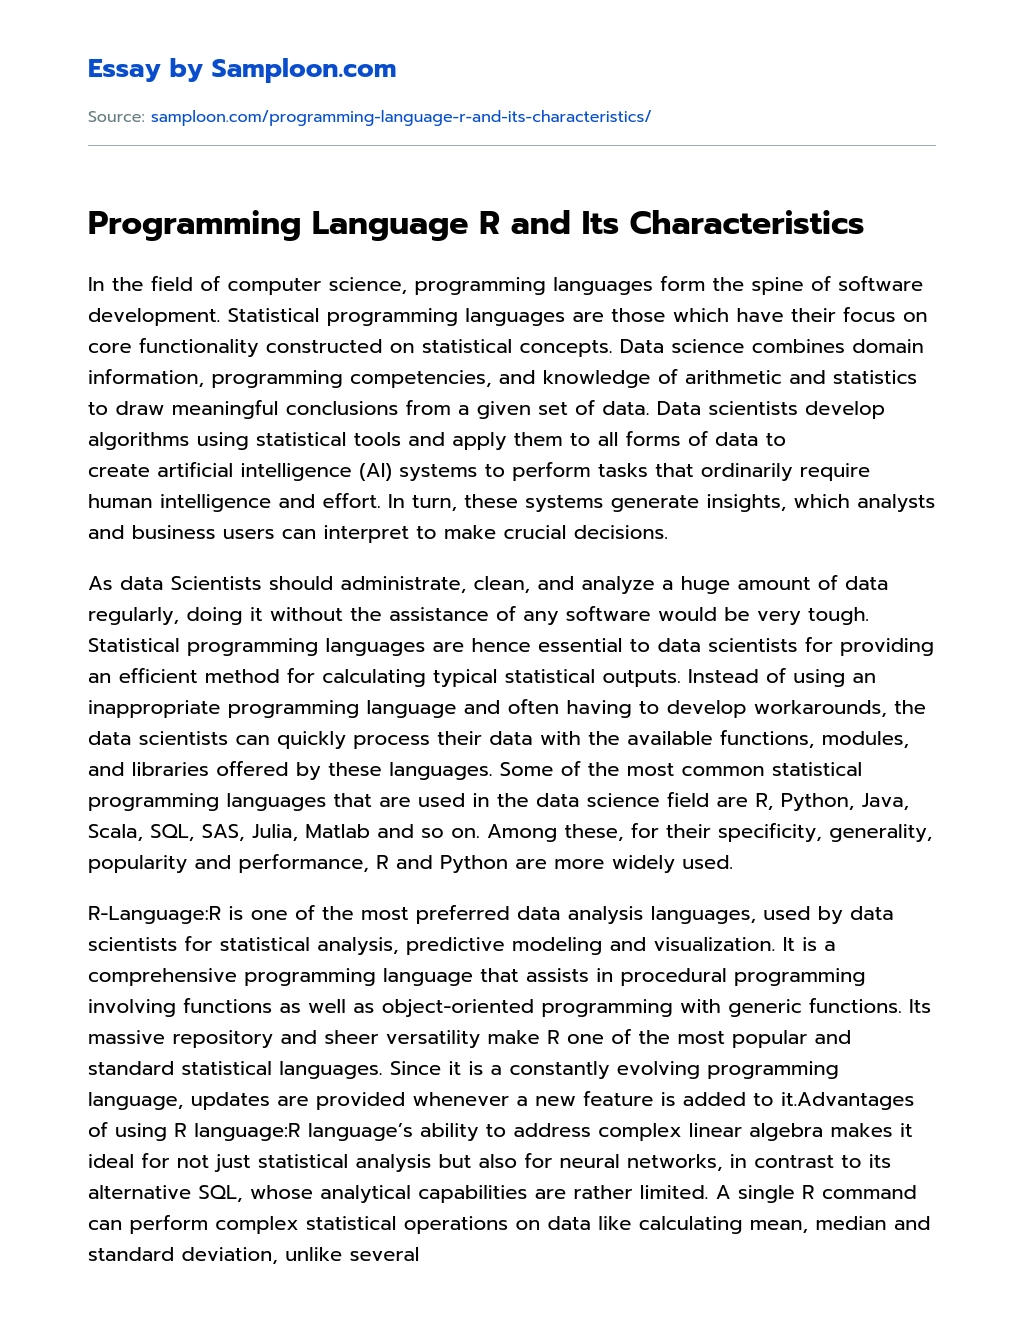 Programming Language R and Its Characteristics essay